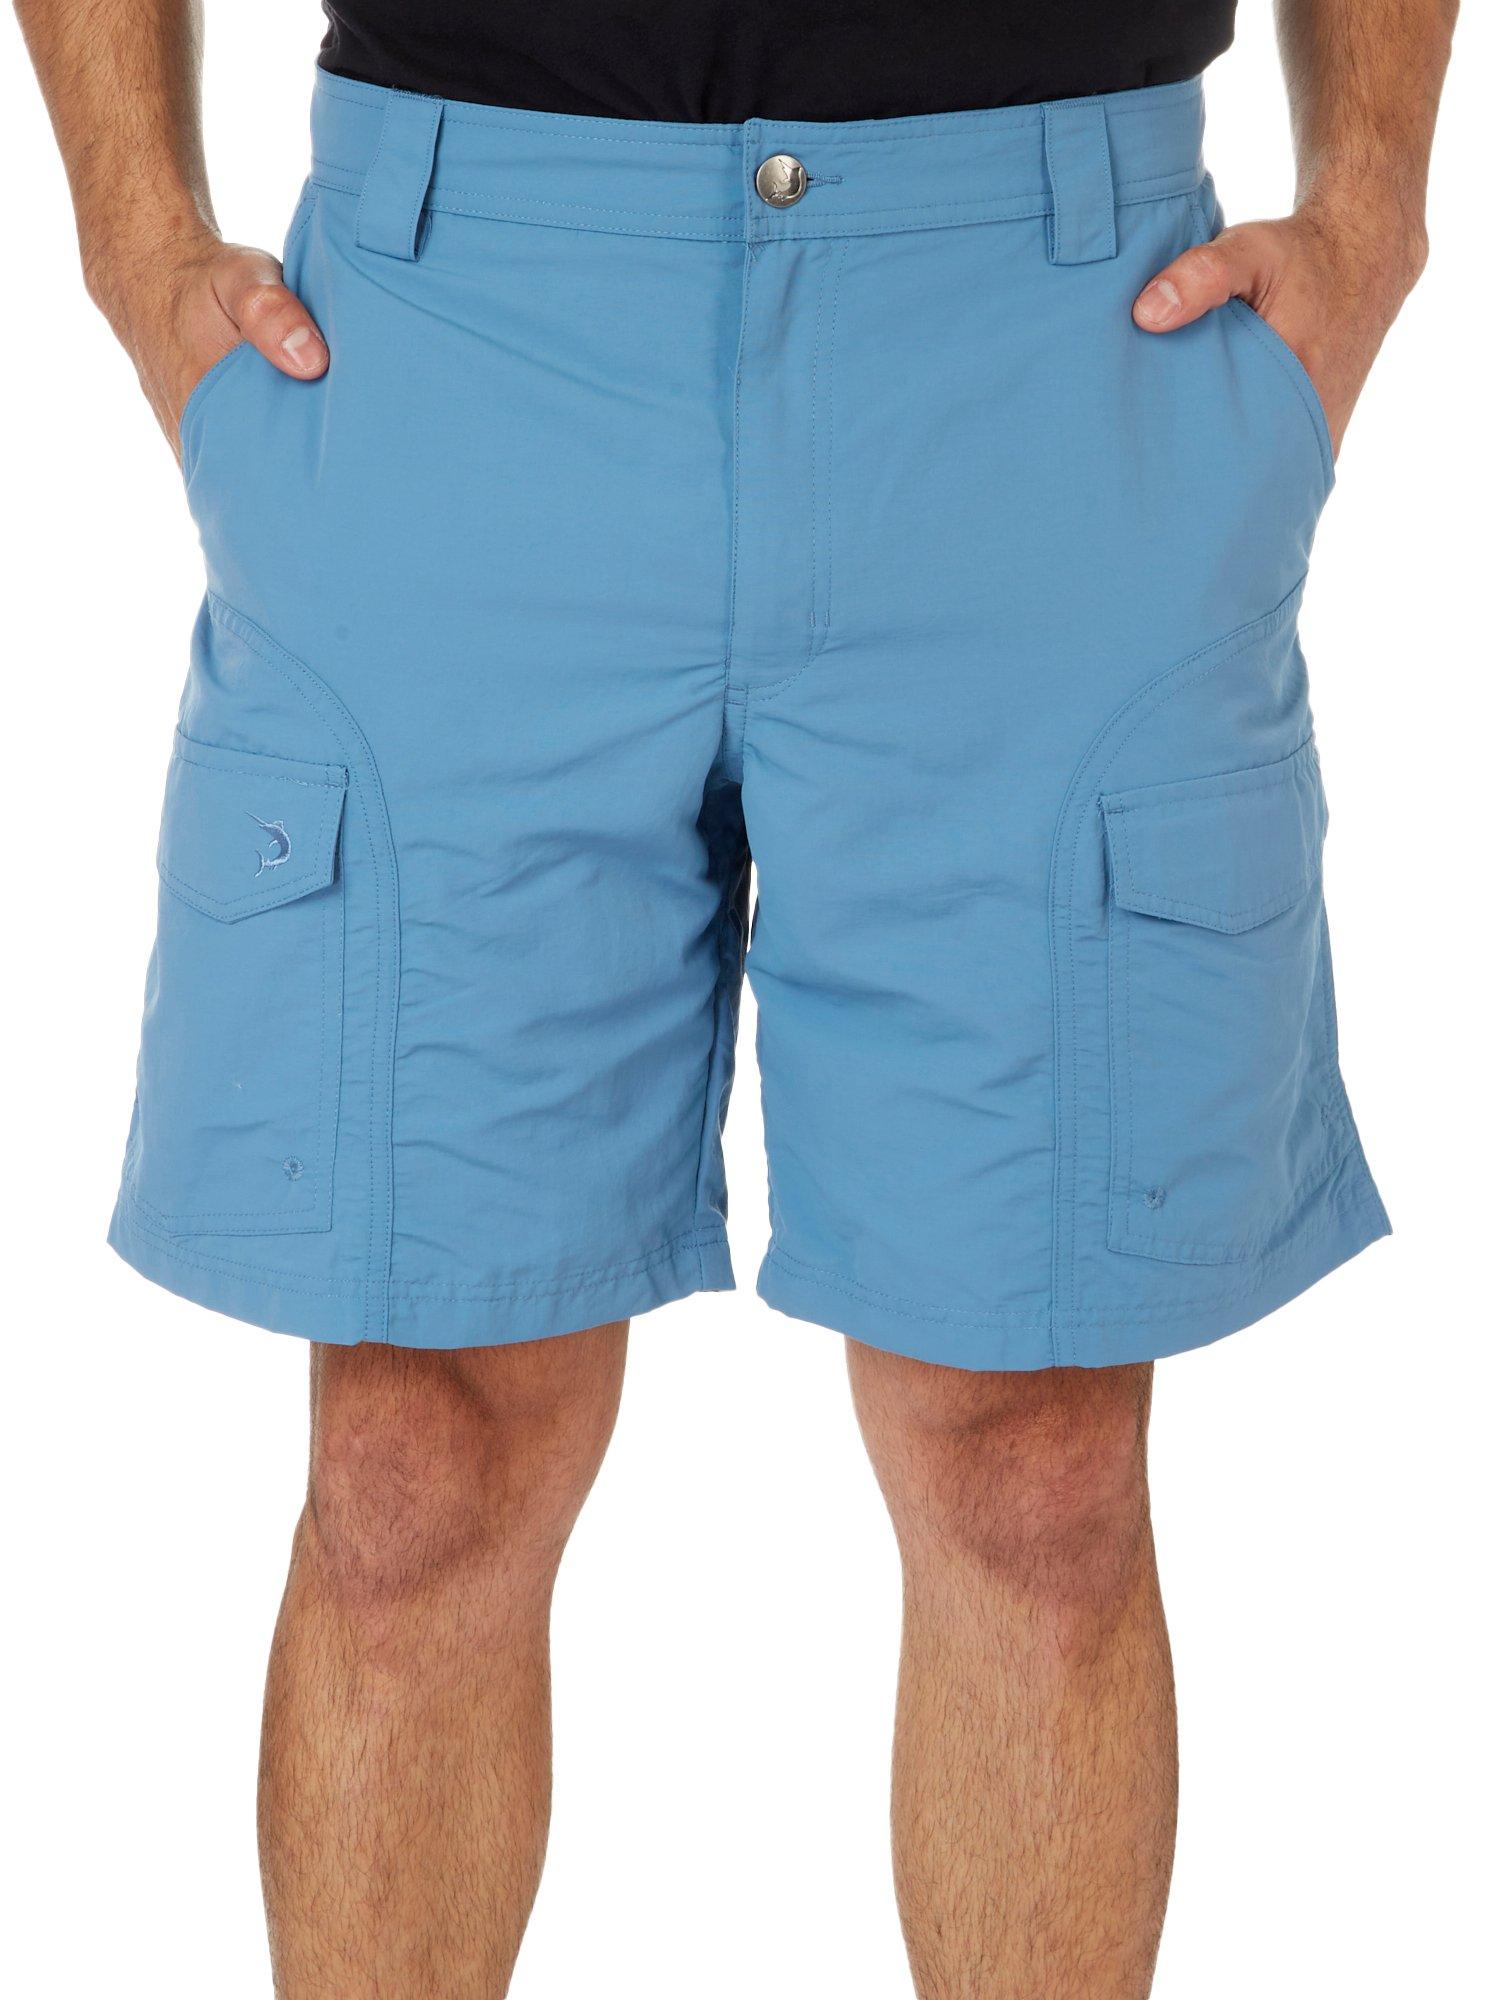 Reel Legends Mens Solid Sandbar Shorts - Grey - 32W